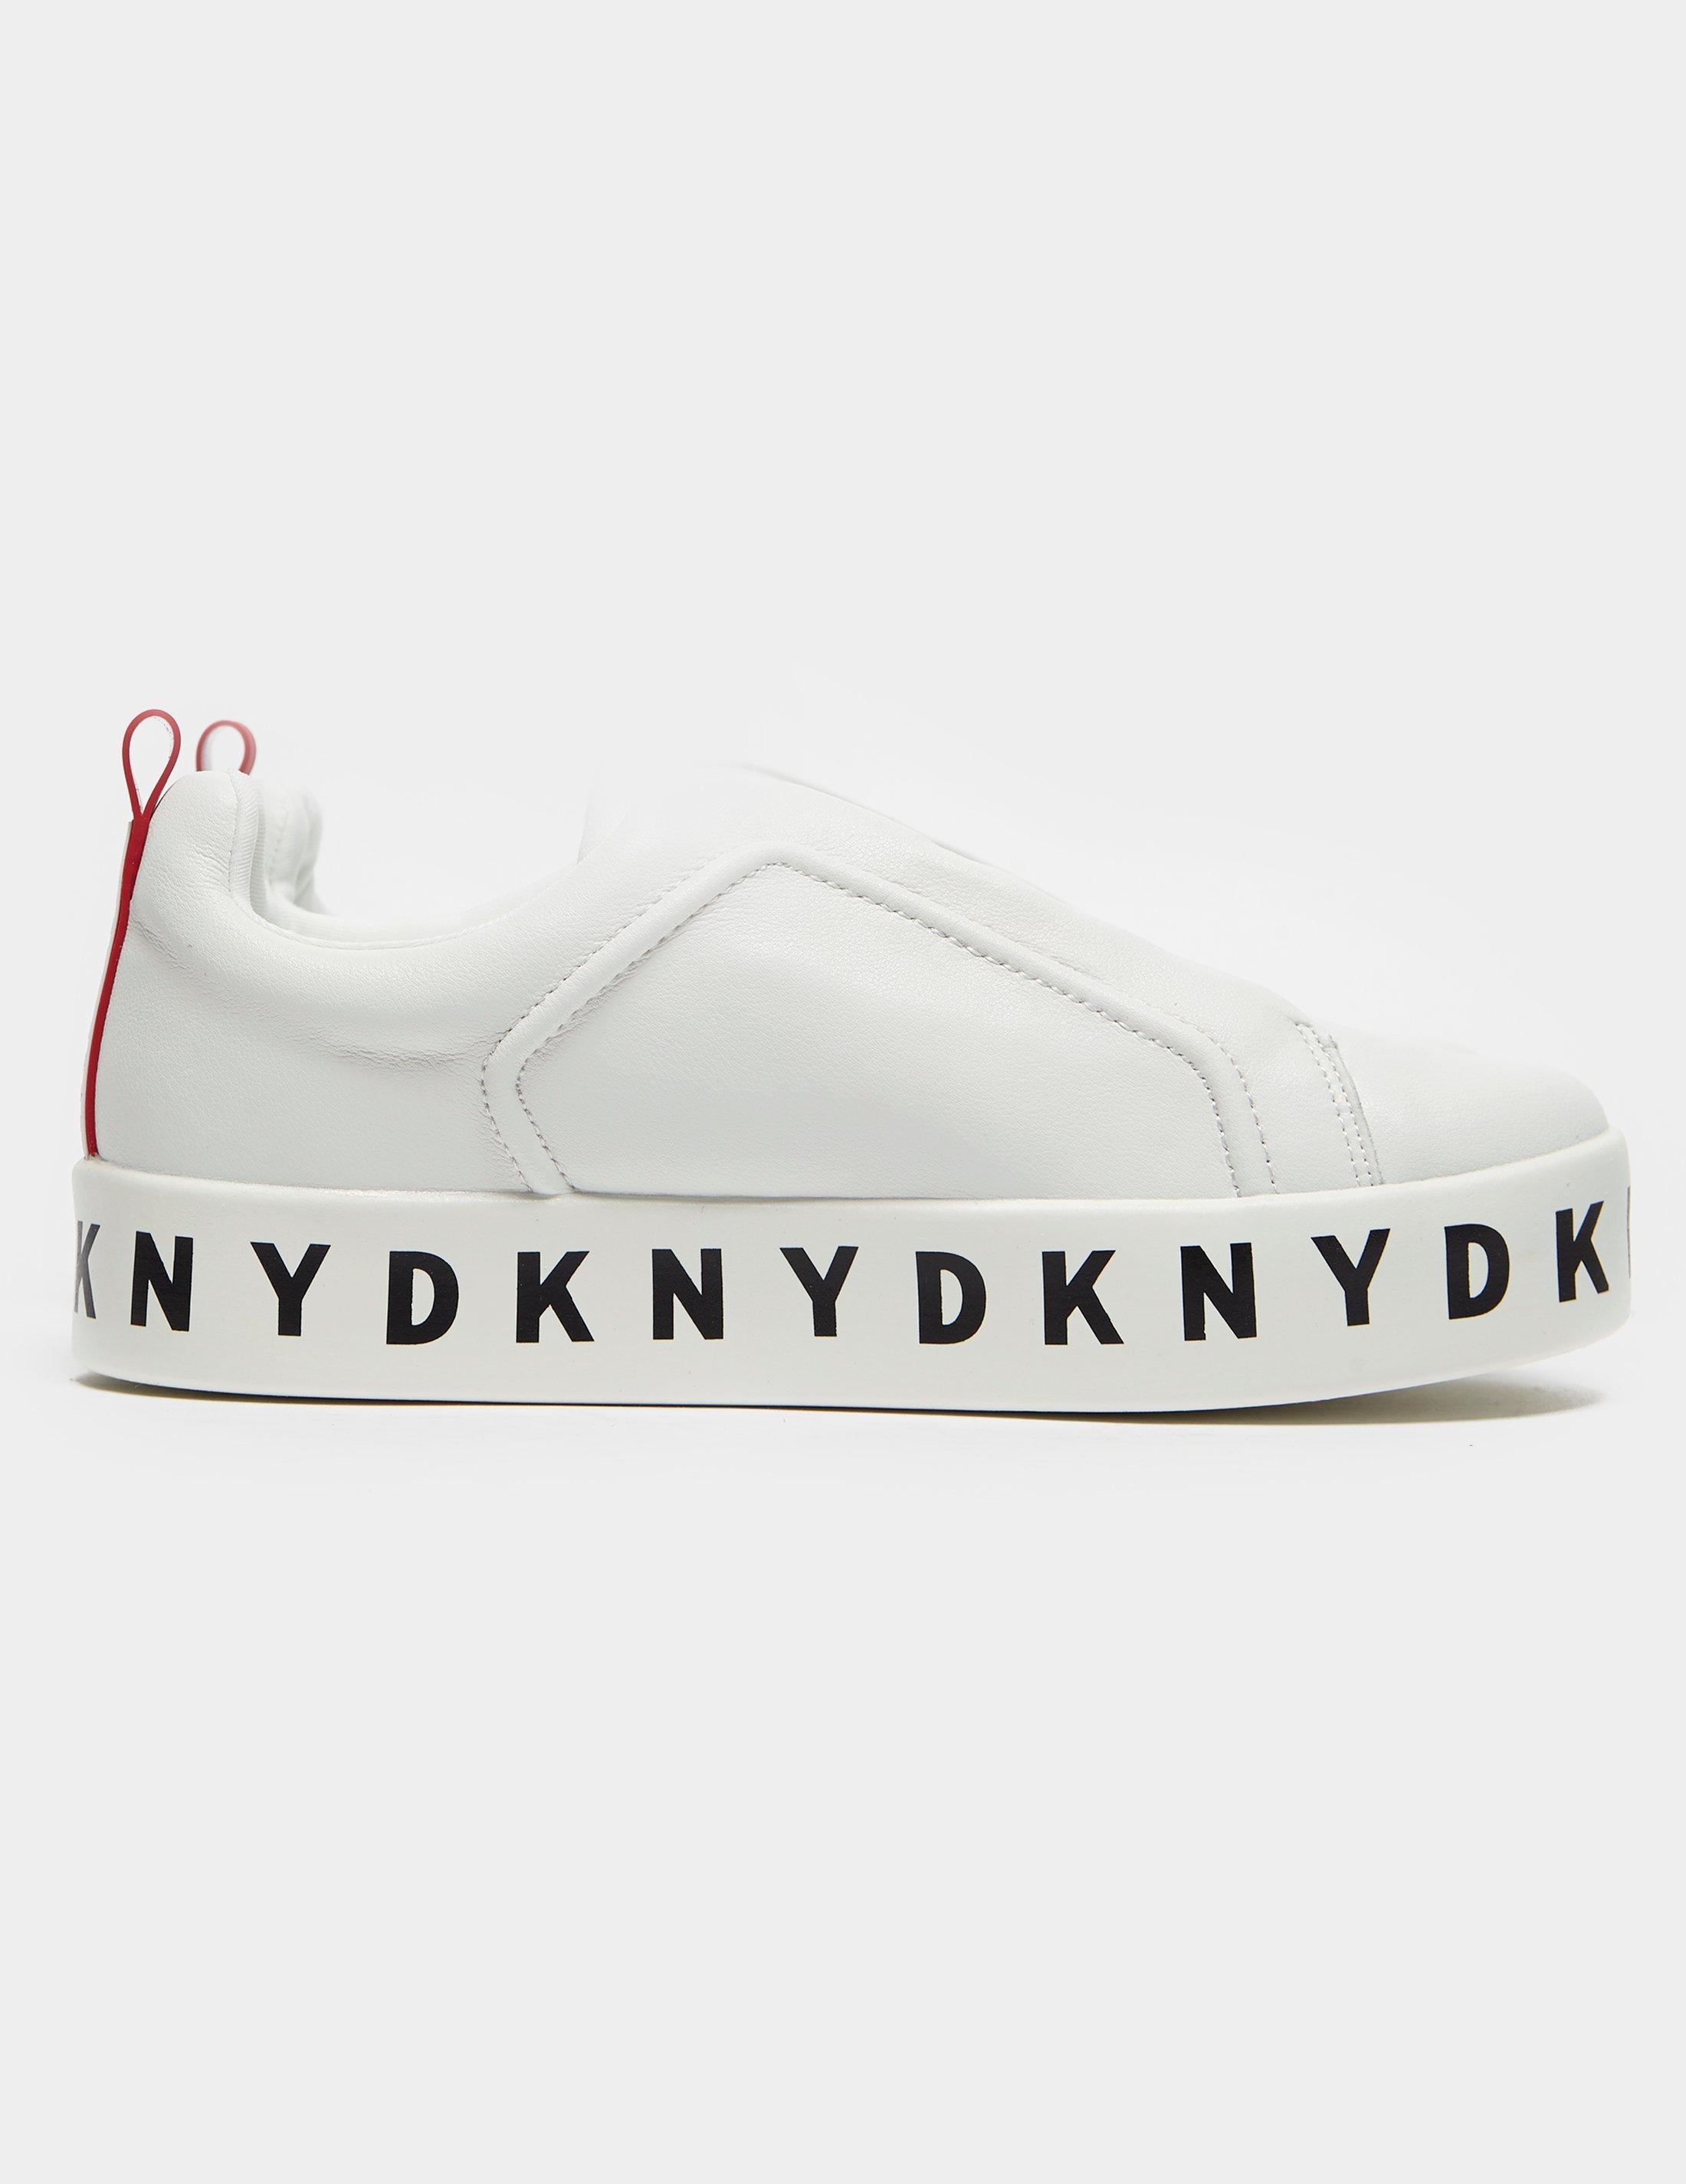 dkny shoes platform